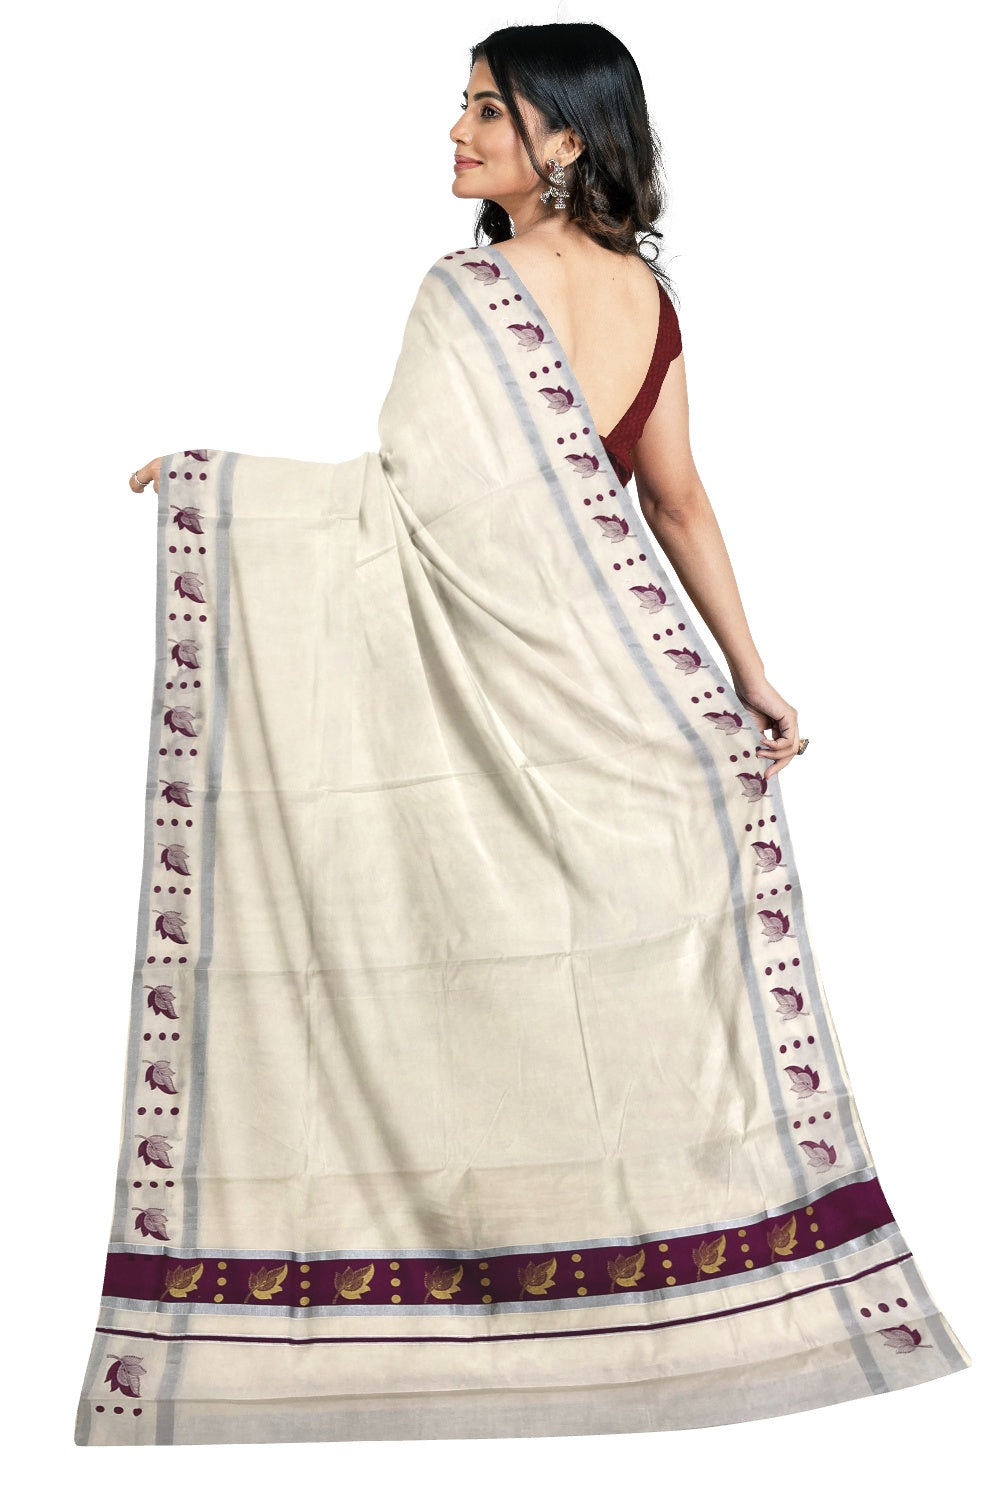 Pure Cotton Kerala Saree with Golden Leaf Block Prints on Silver Kasavu and Purple Pallu